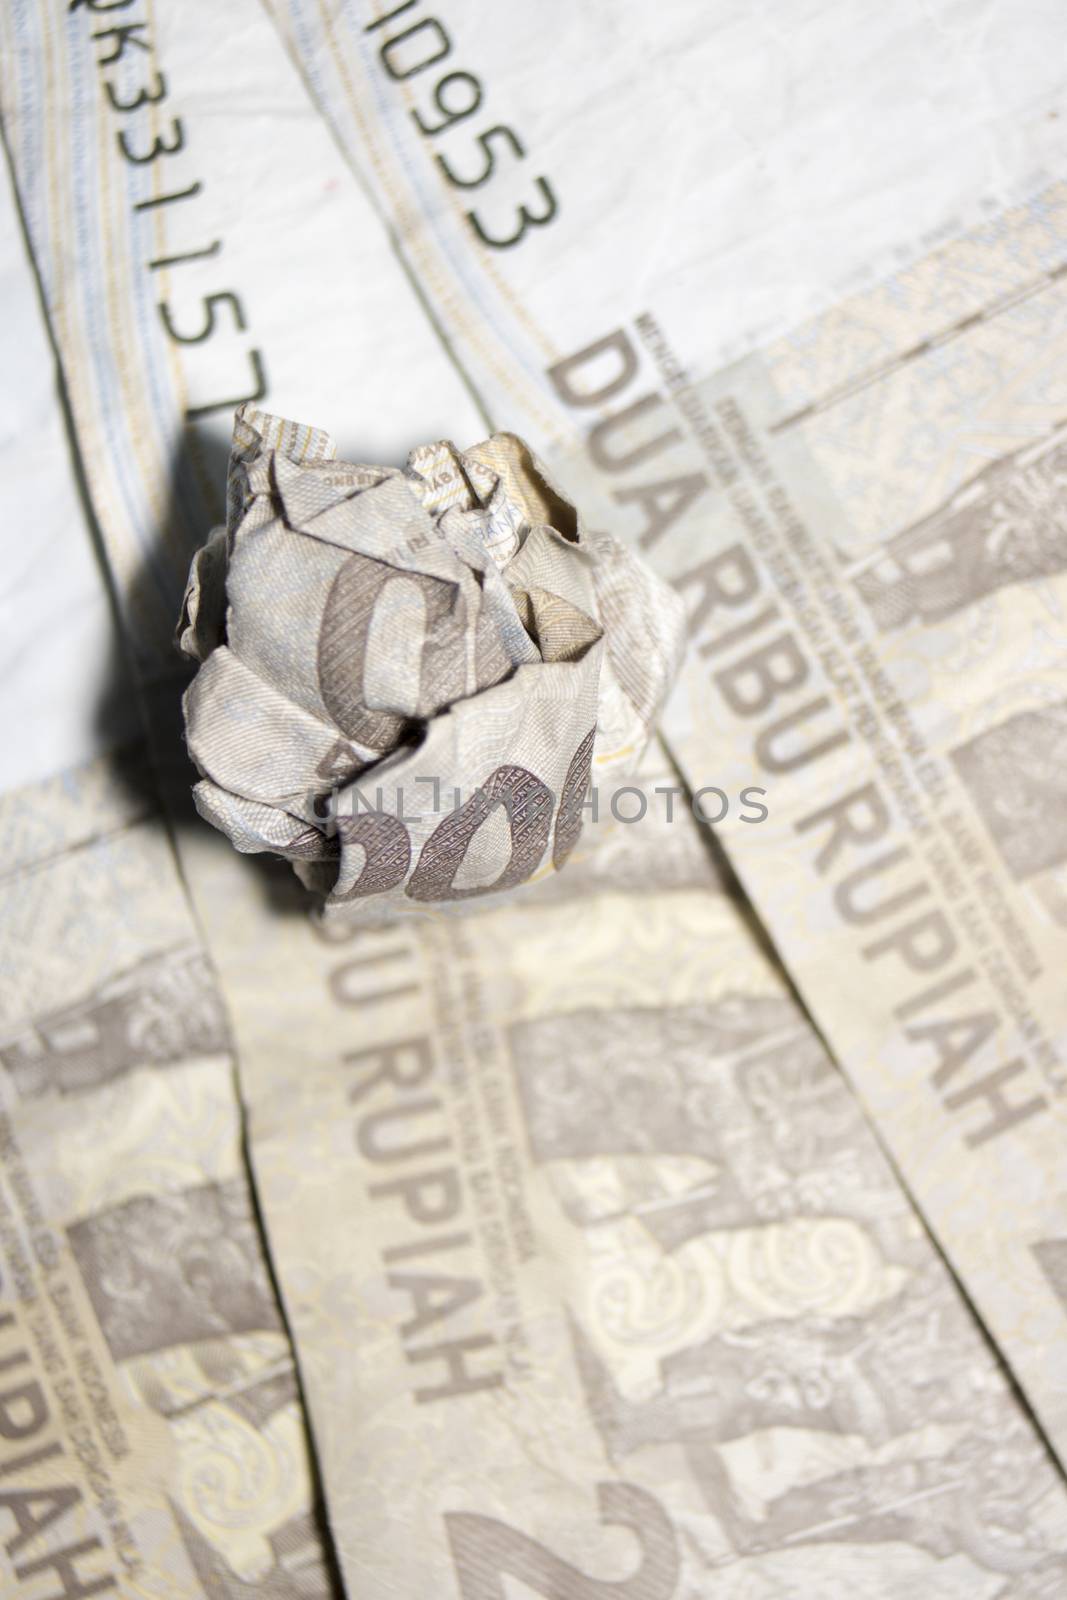 macro close up crumpled rupiah indonesia money detail